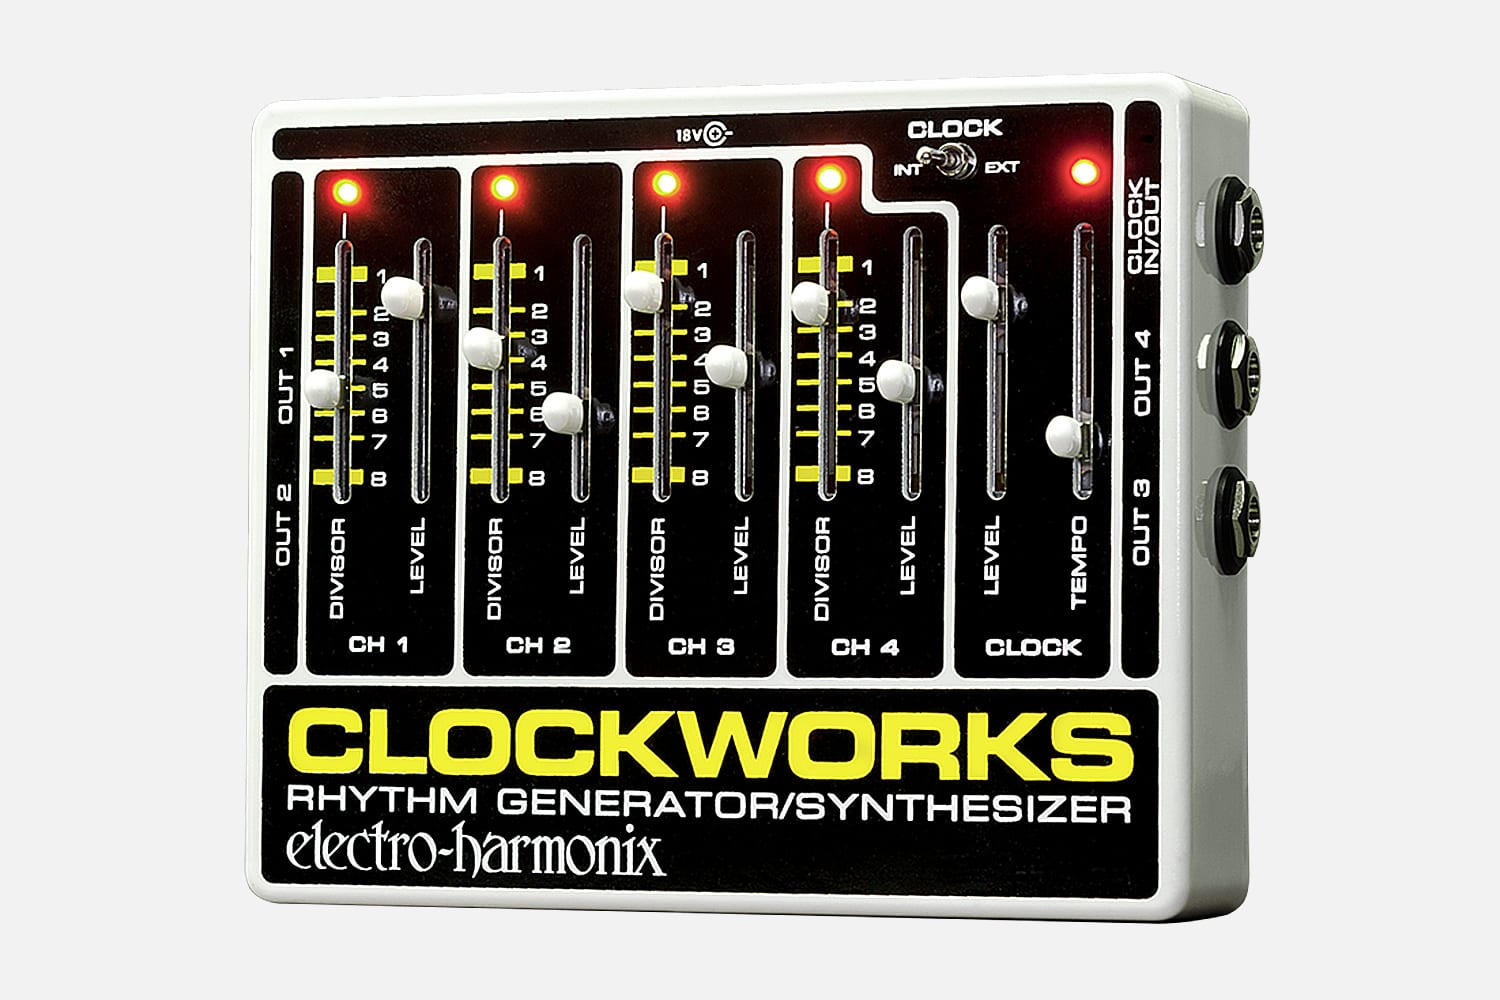 Clockworks | Rhythm Generator / Synthesizer - Electro-Harmonix